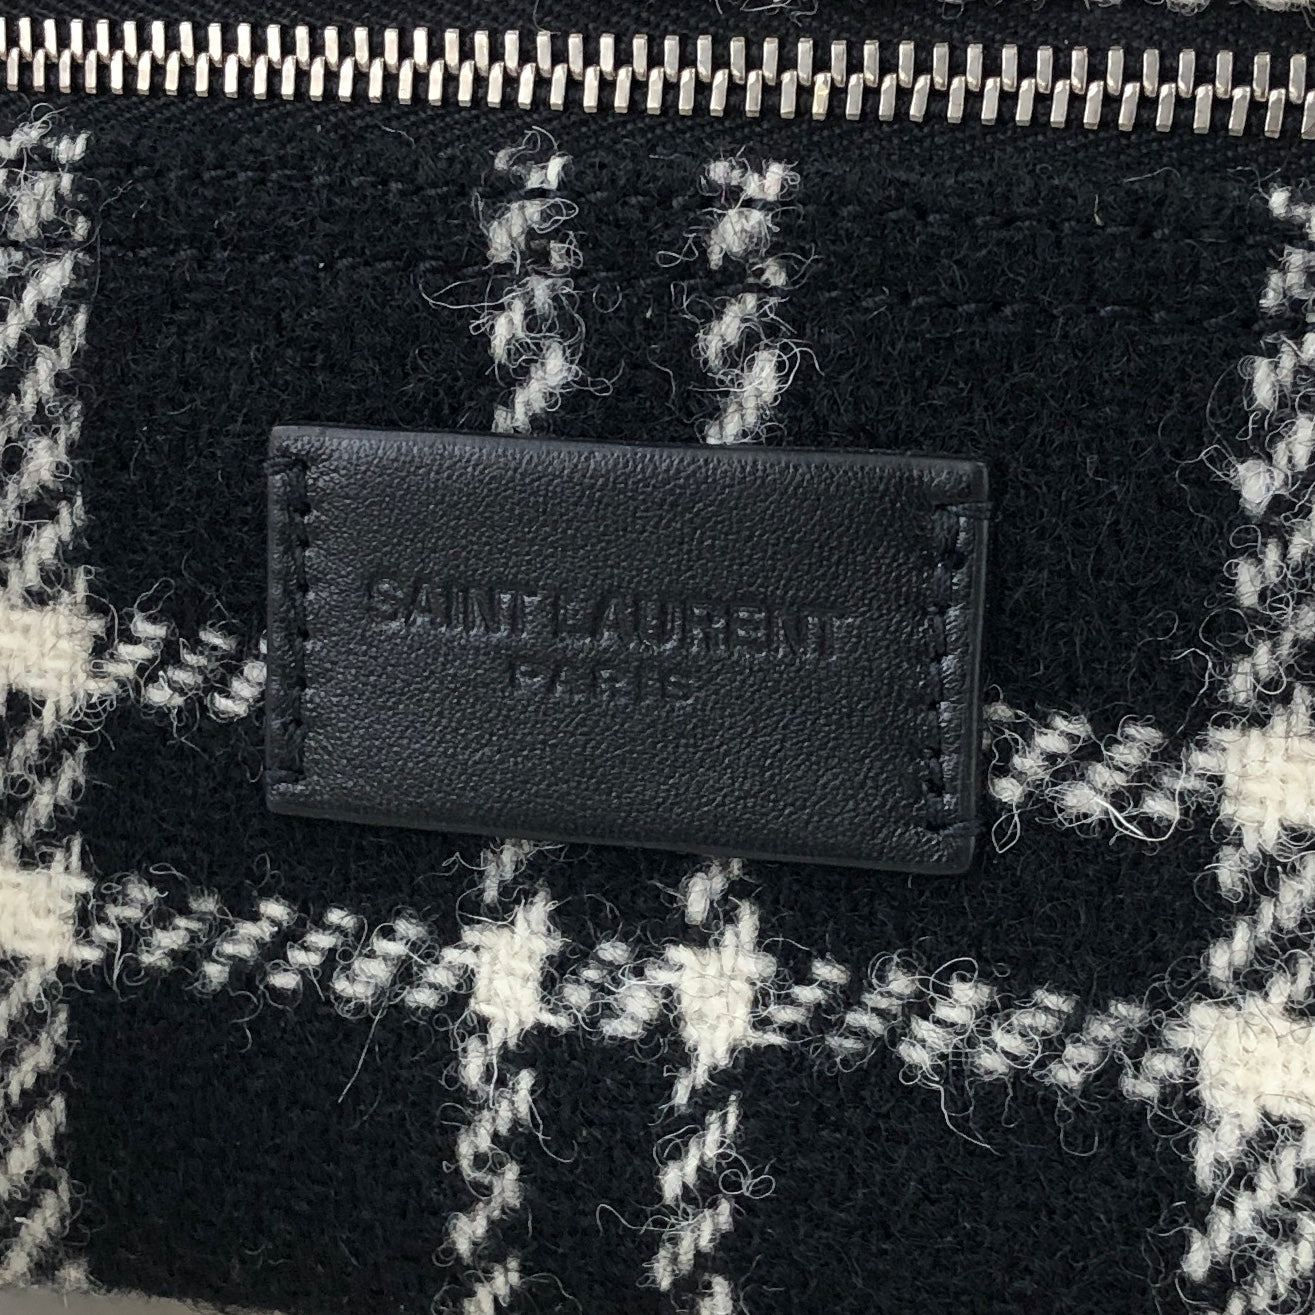 SAINTLAURENT PARIS Fabric Sling Bag Black White Vintage y3fayf